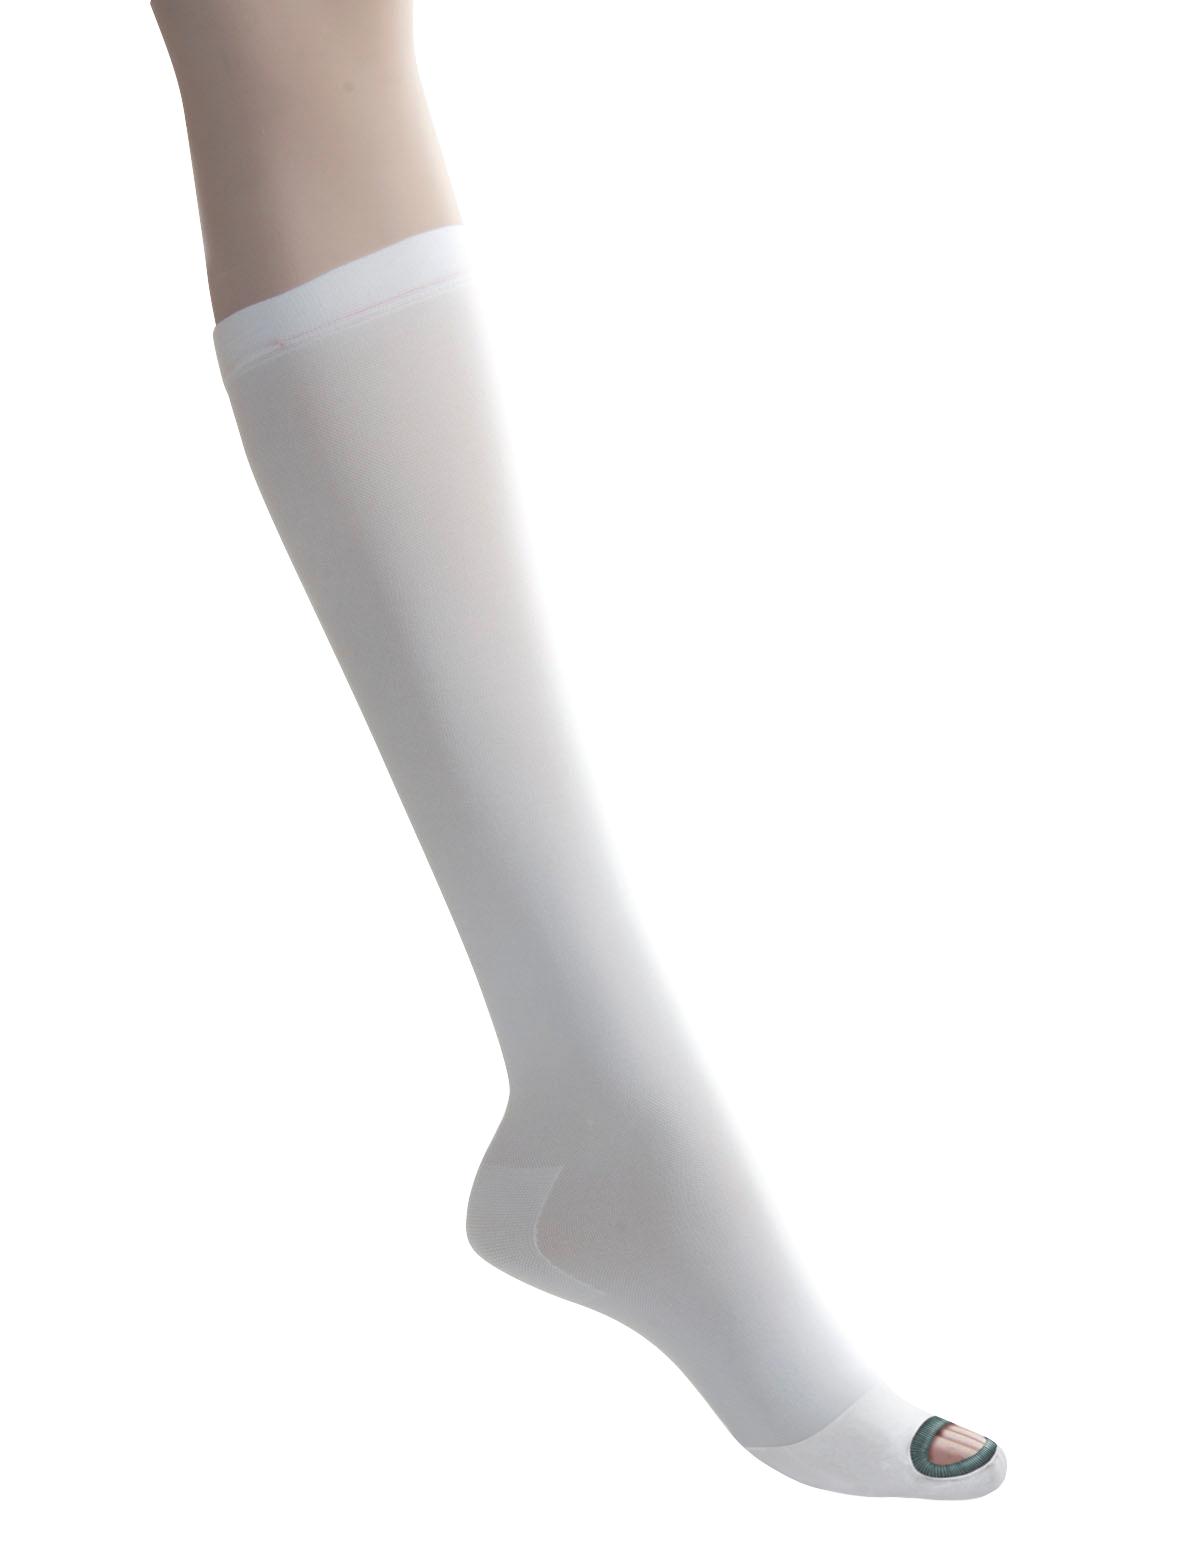 T.E.D. Anti-Embolism Stockings, Thigh High, X-Large/Regular, White